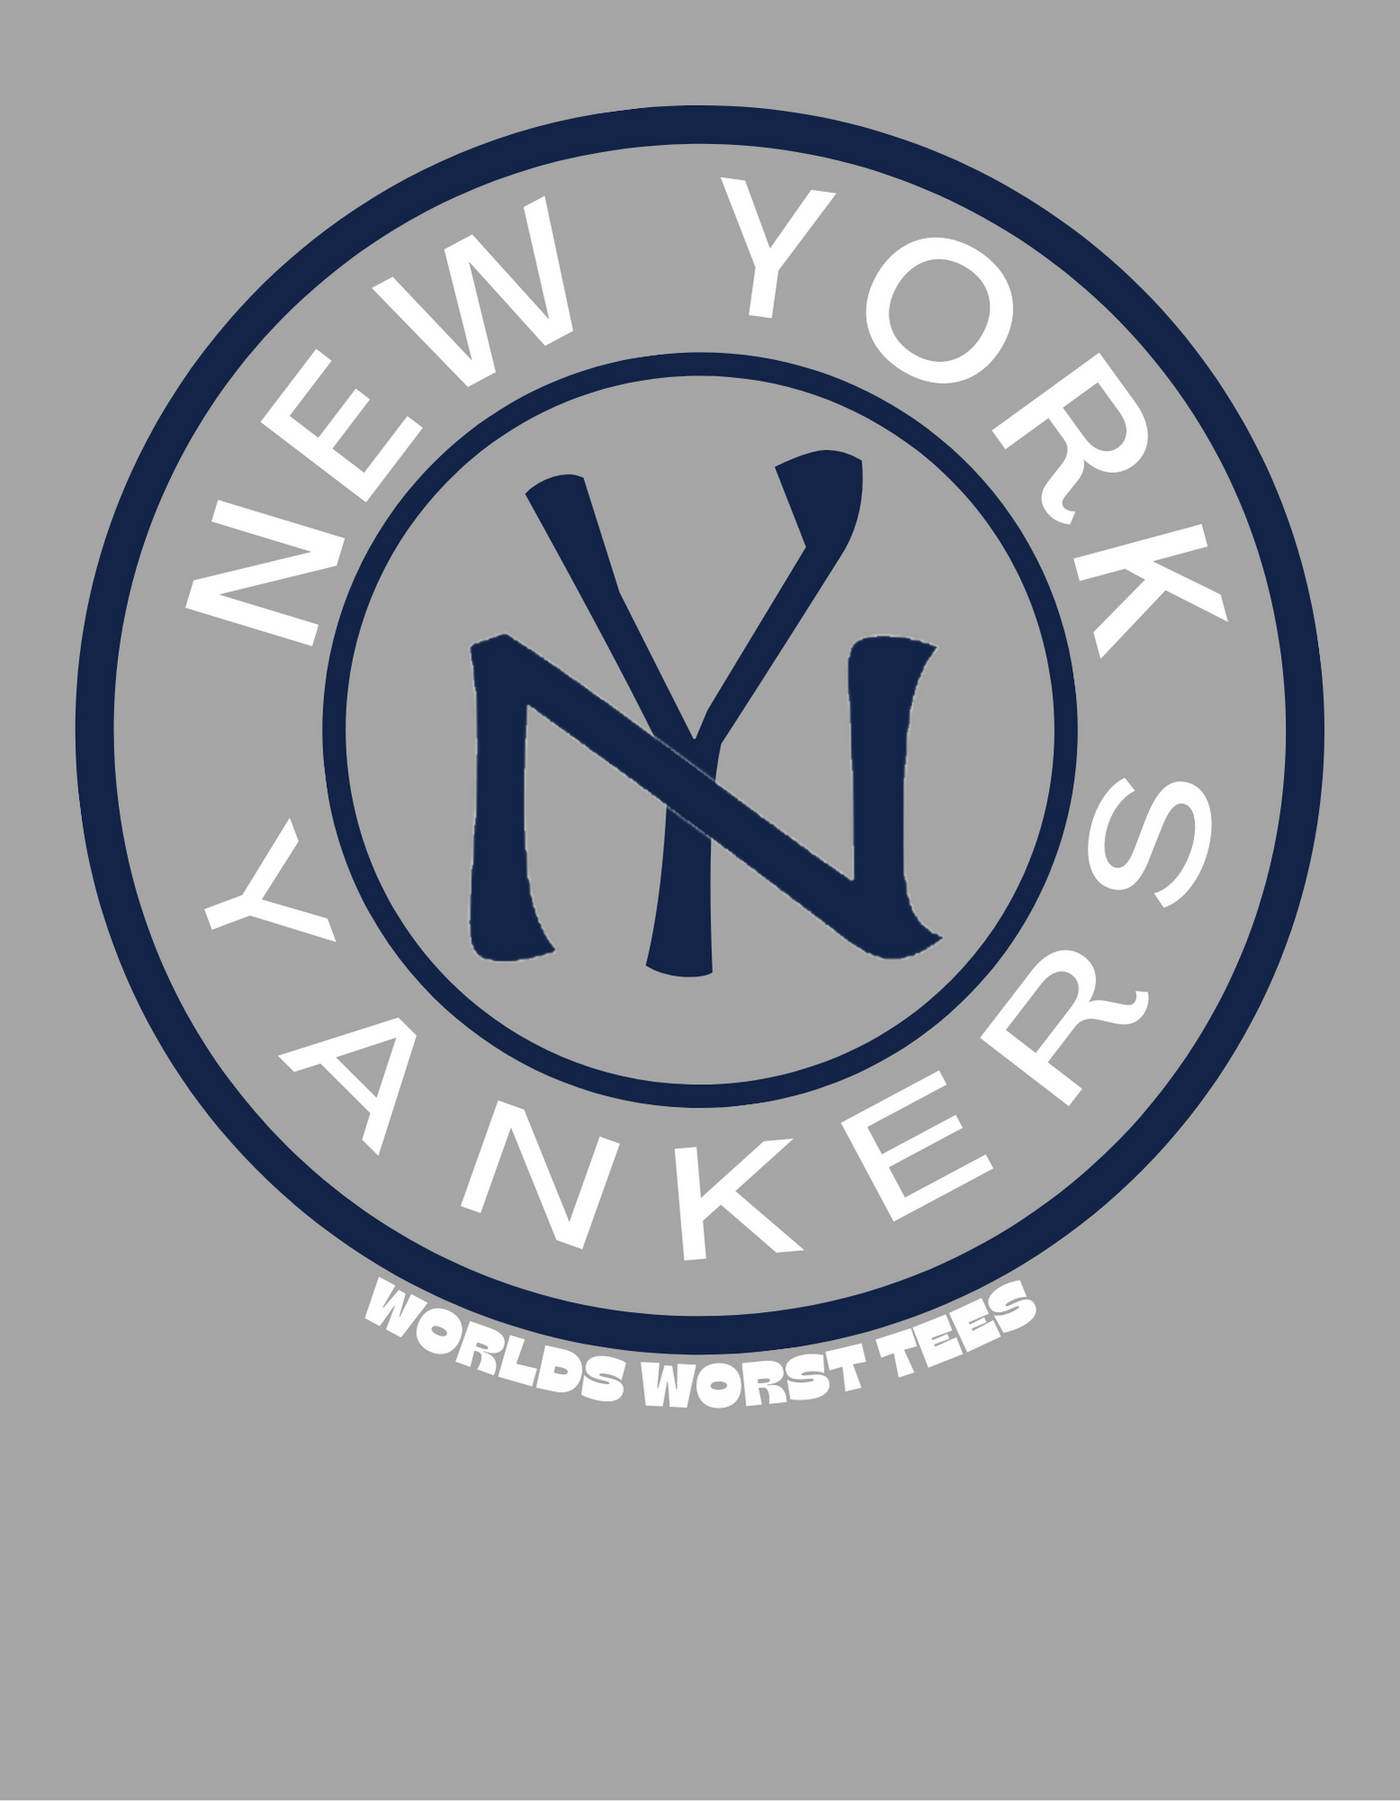 NY Yankers #7 Mike Hoochie Tee